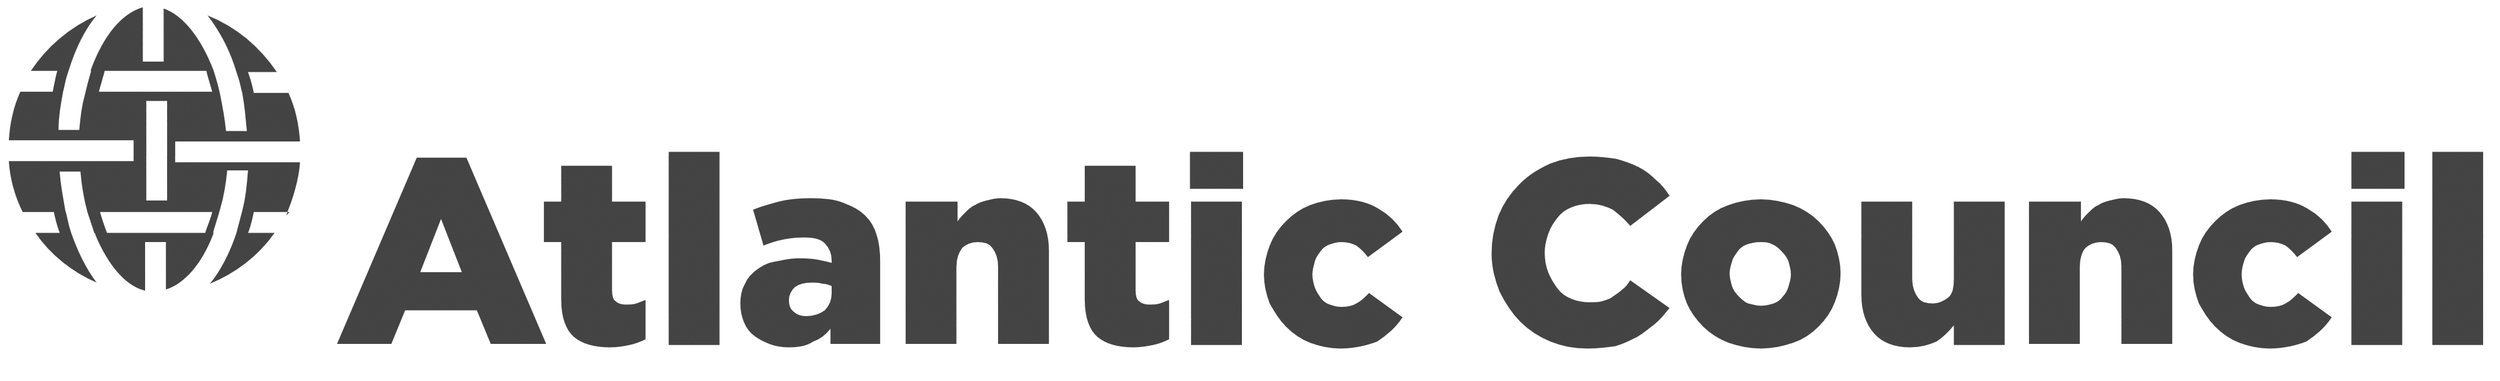 Atlantic_Council_logo.jpg